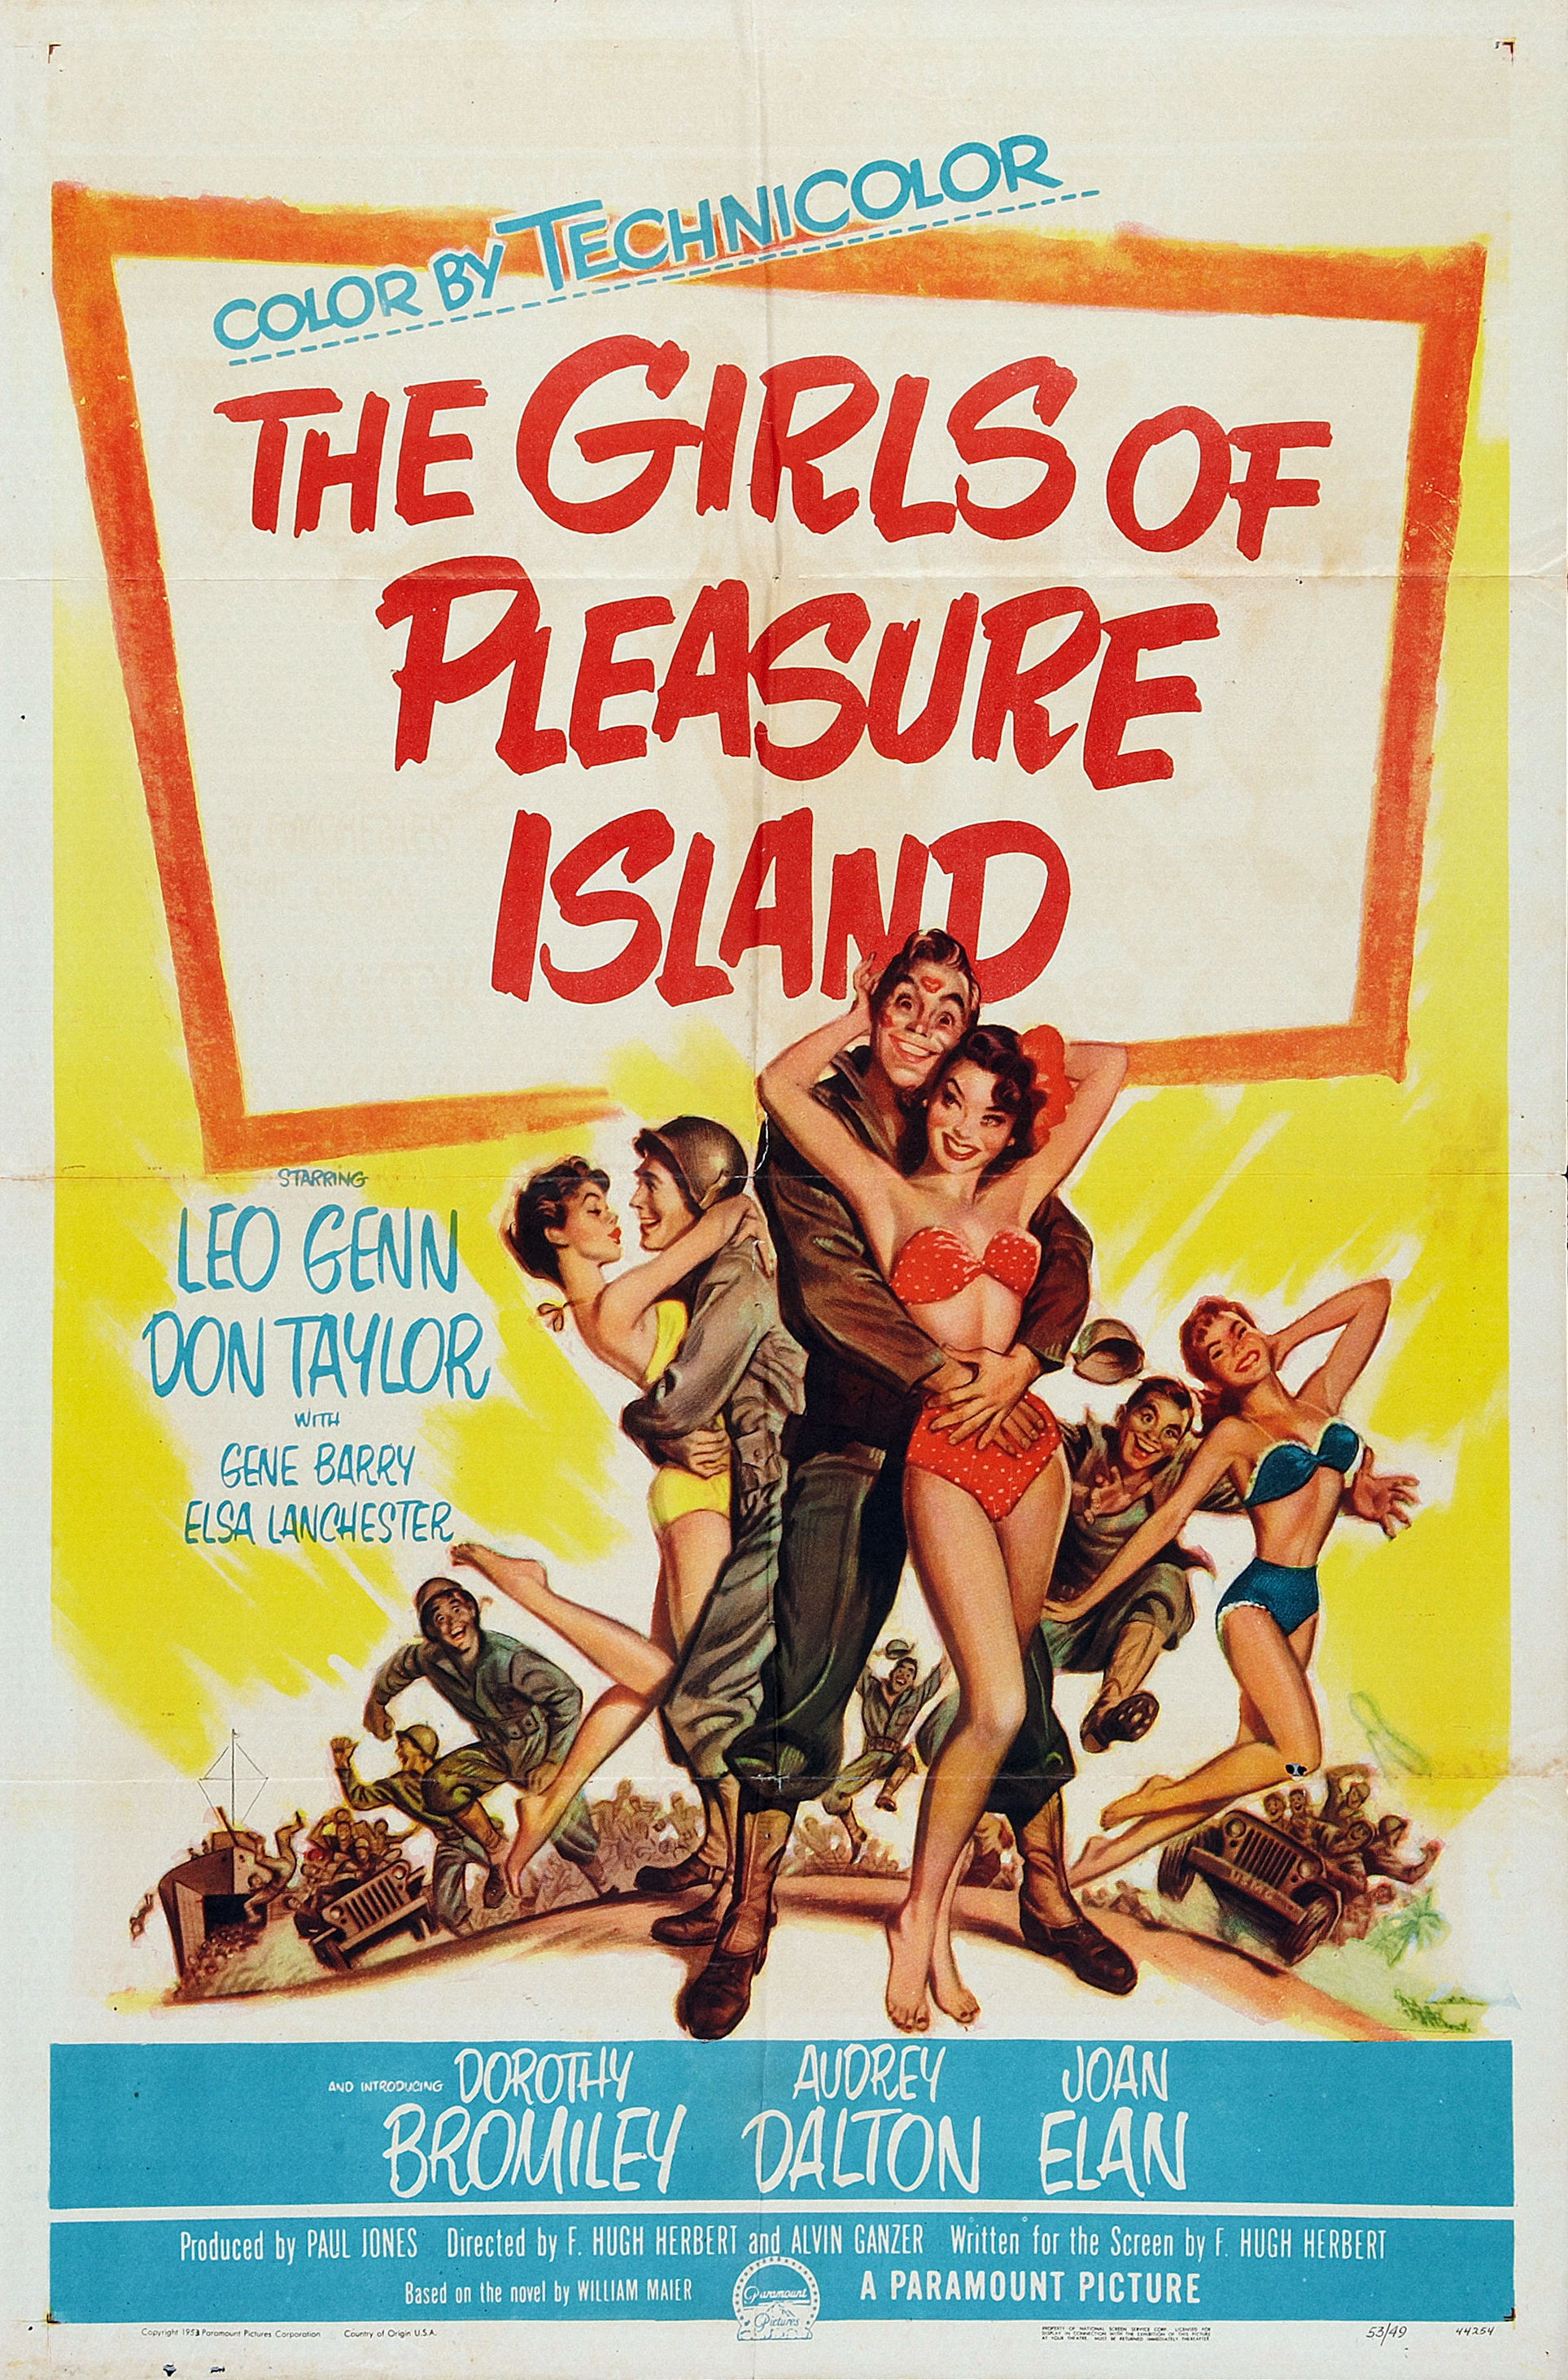 Island of plasure. Pleasure Island. Private movies 5: pleasure Island 2002 с переводом.